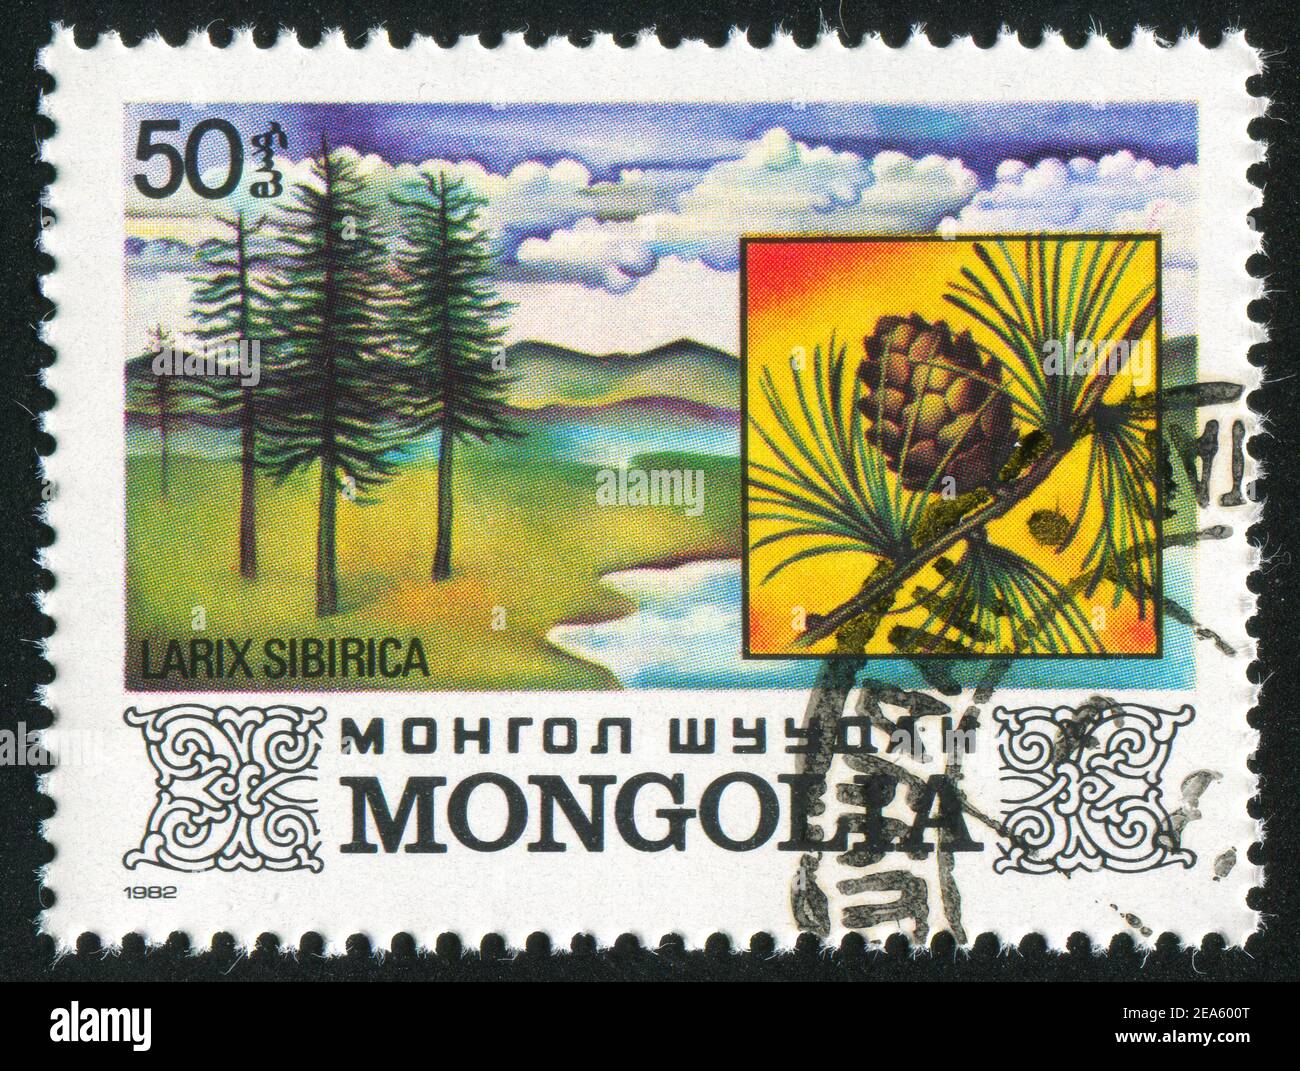 MONGOLIA - CIRCA 1982: stamp printed by Mongolia, shows Larix Sibirica, circa 1982 Stock Photo